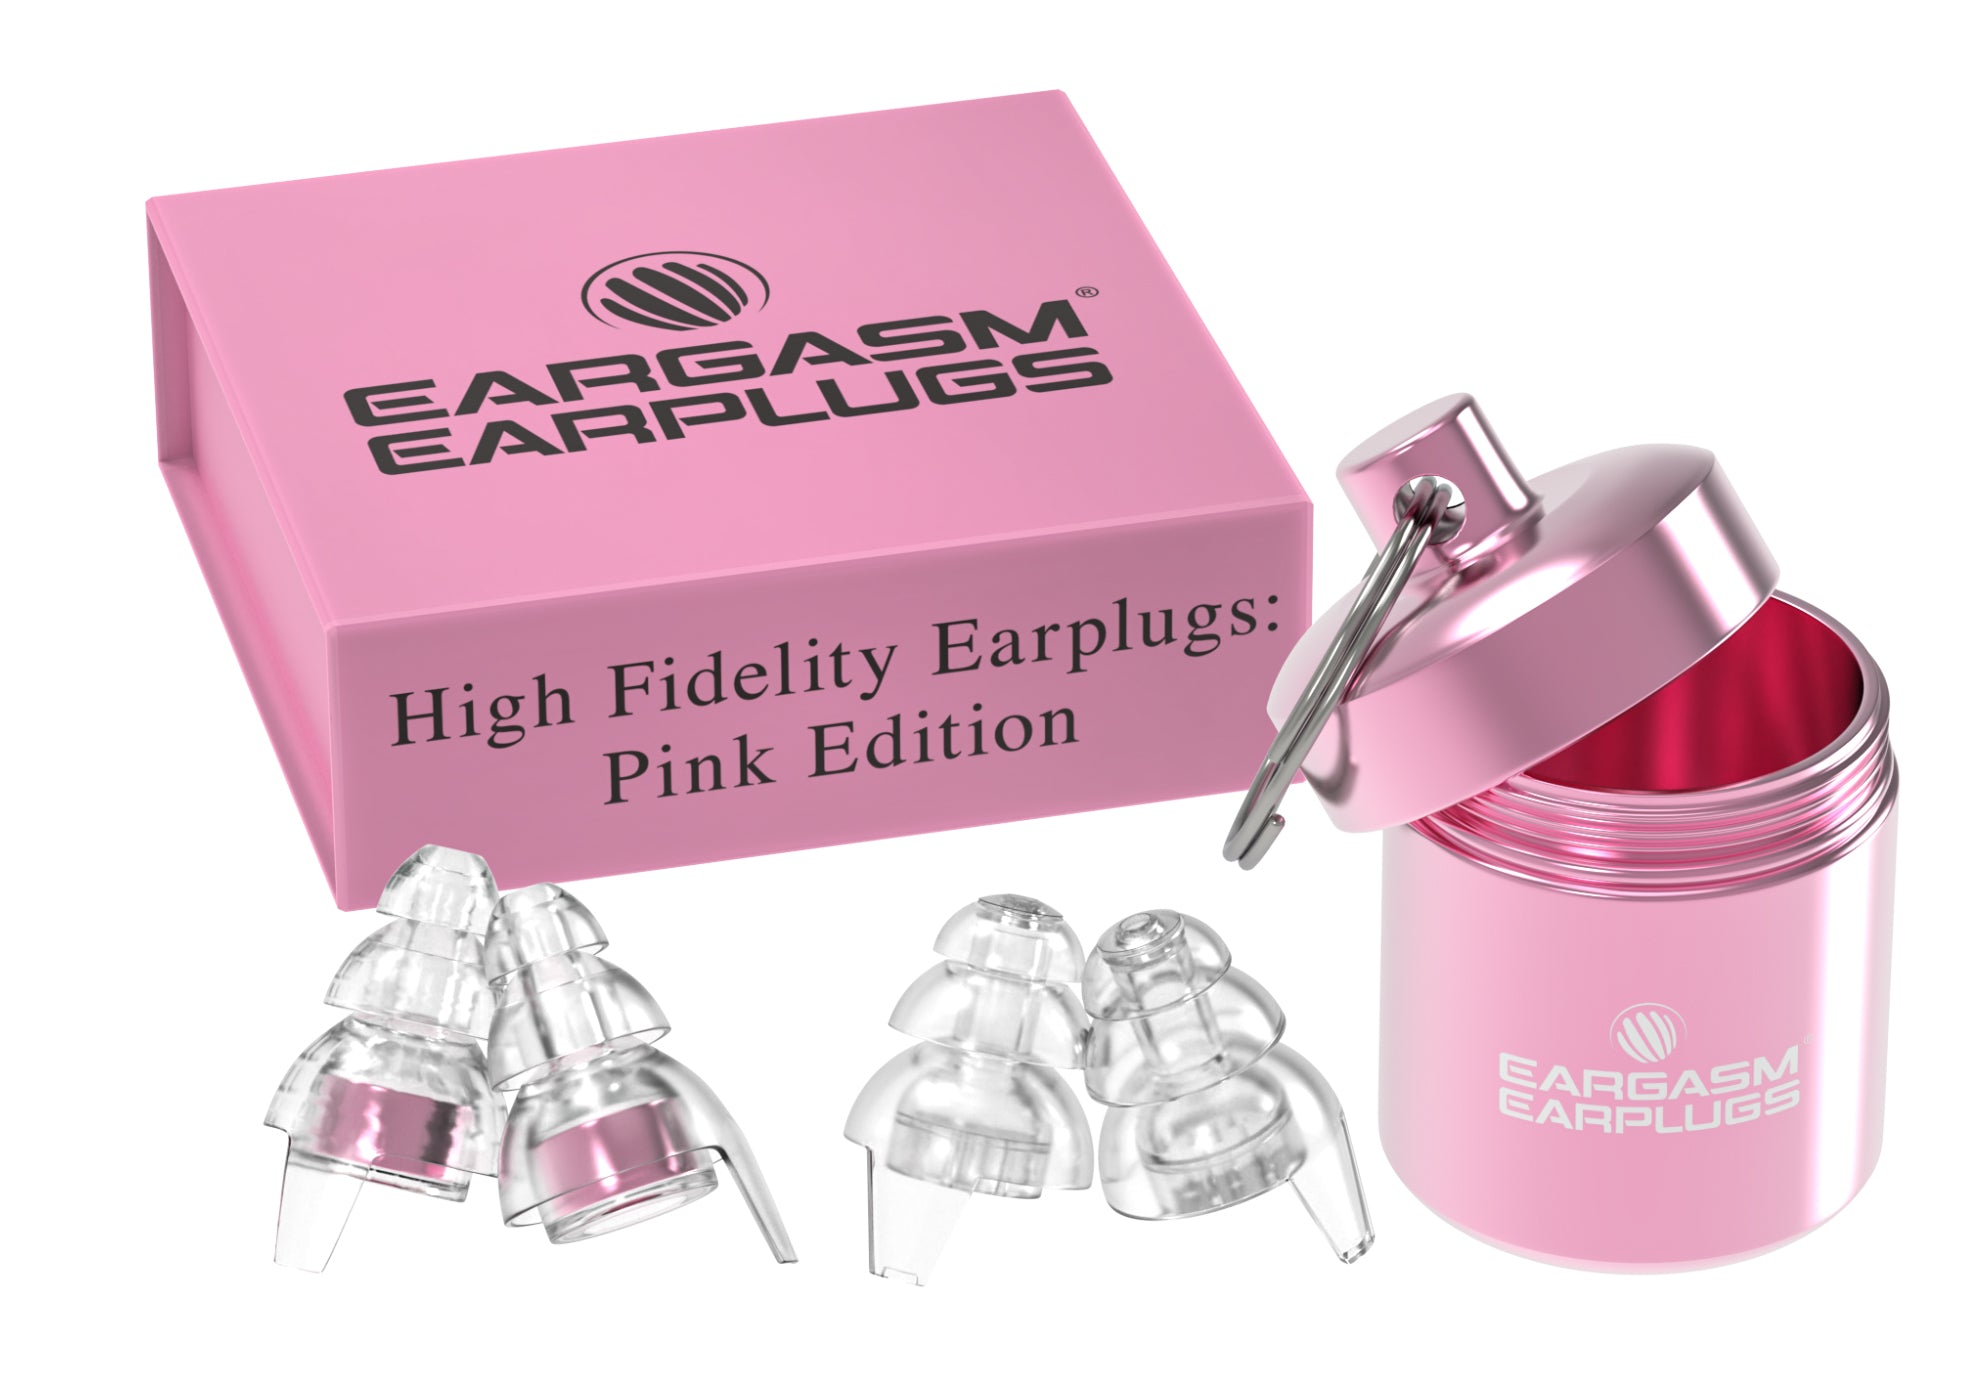 High Fidelity Earplugs: Pink Edition